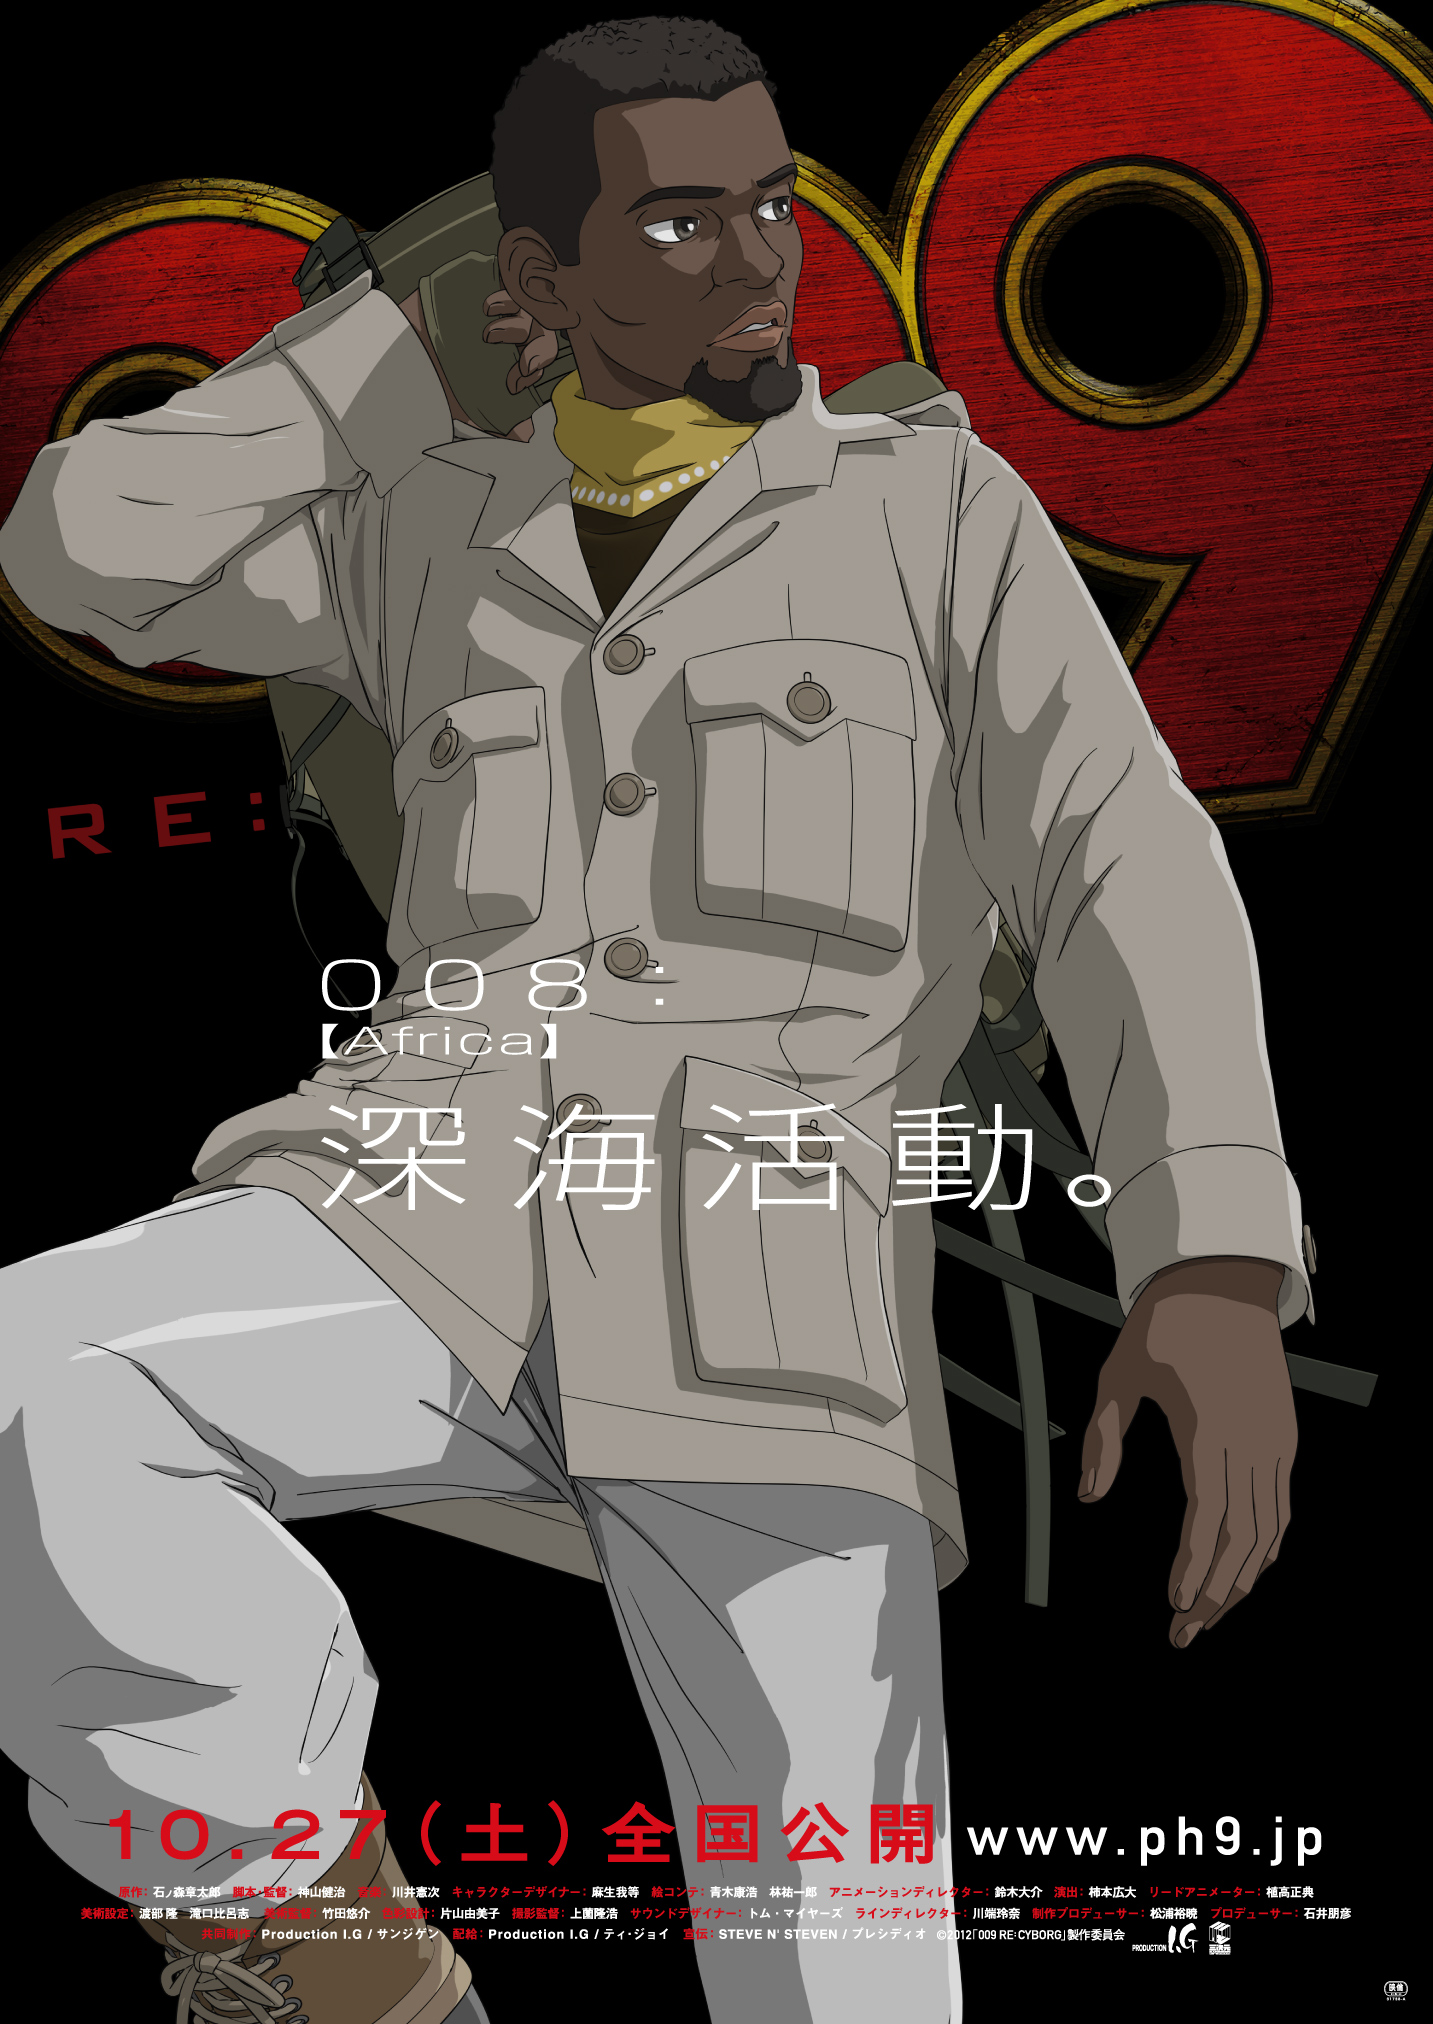 Cyborg 009, A Legend Repeatedly Reborn – OTAQUEST